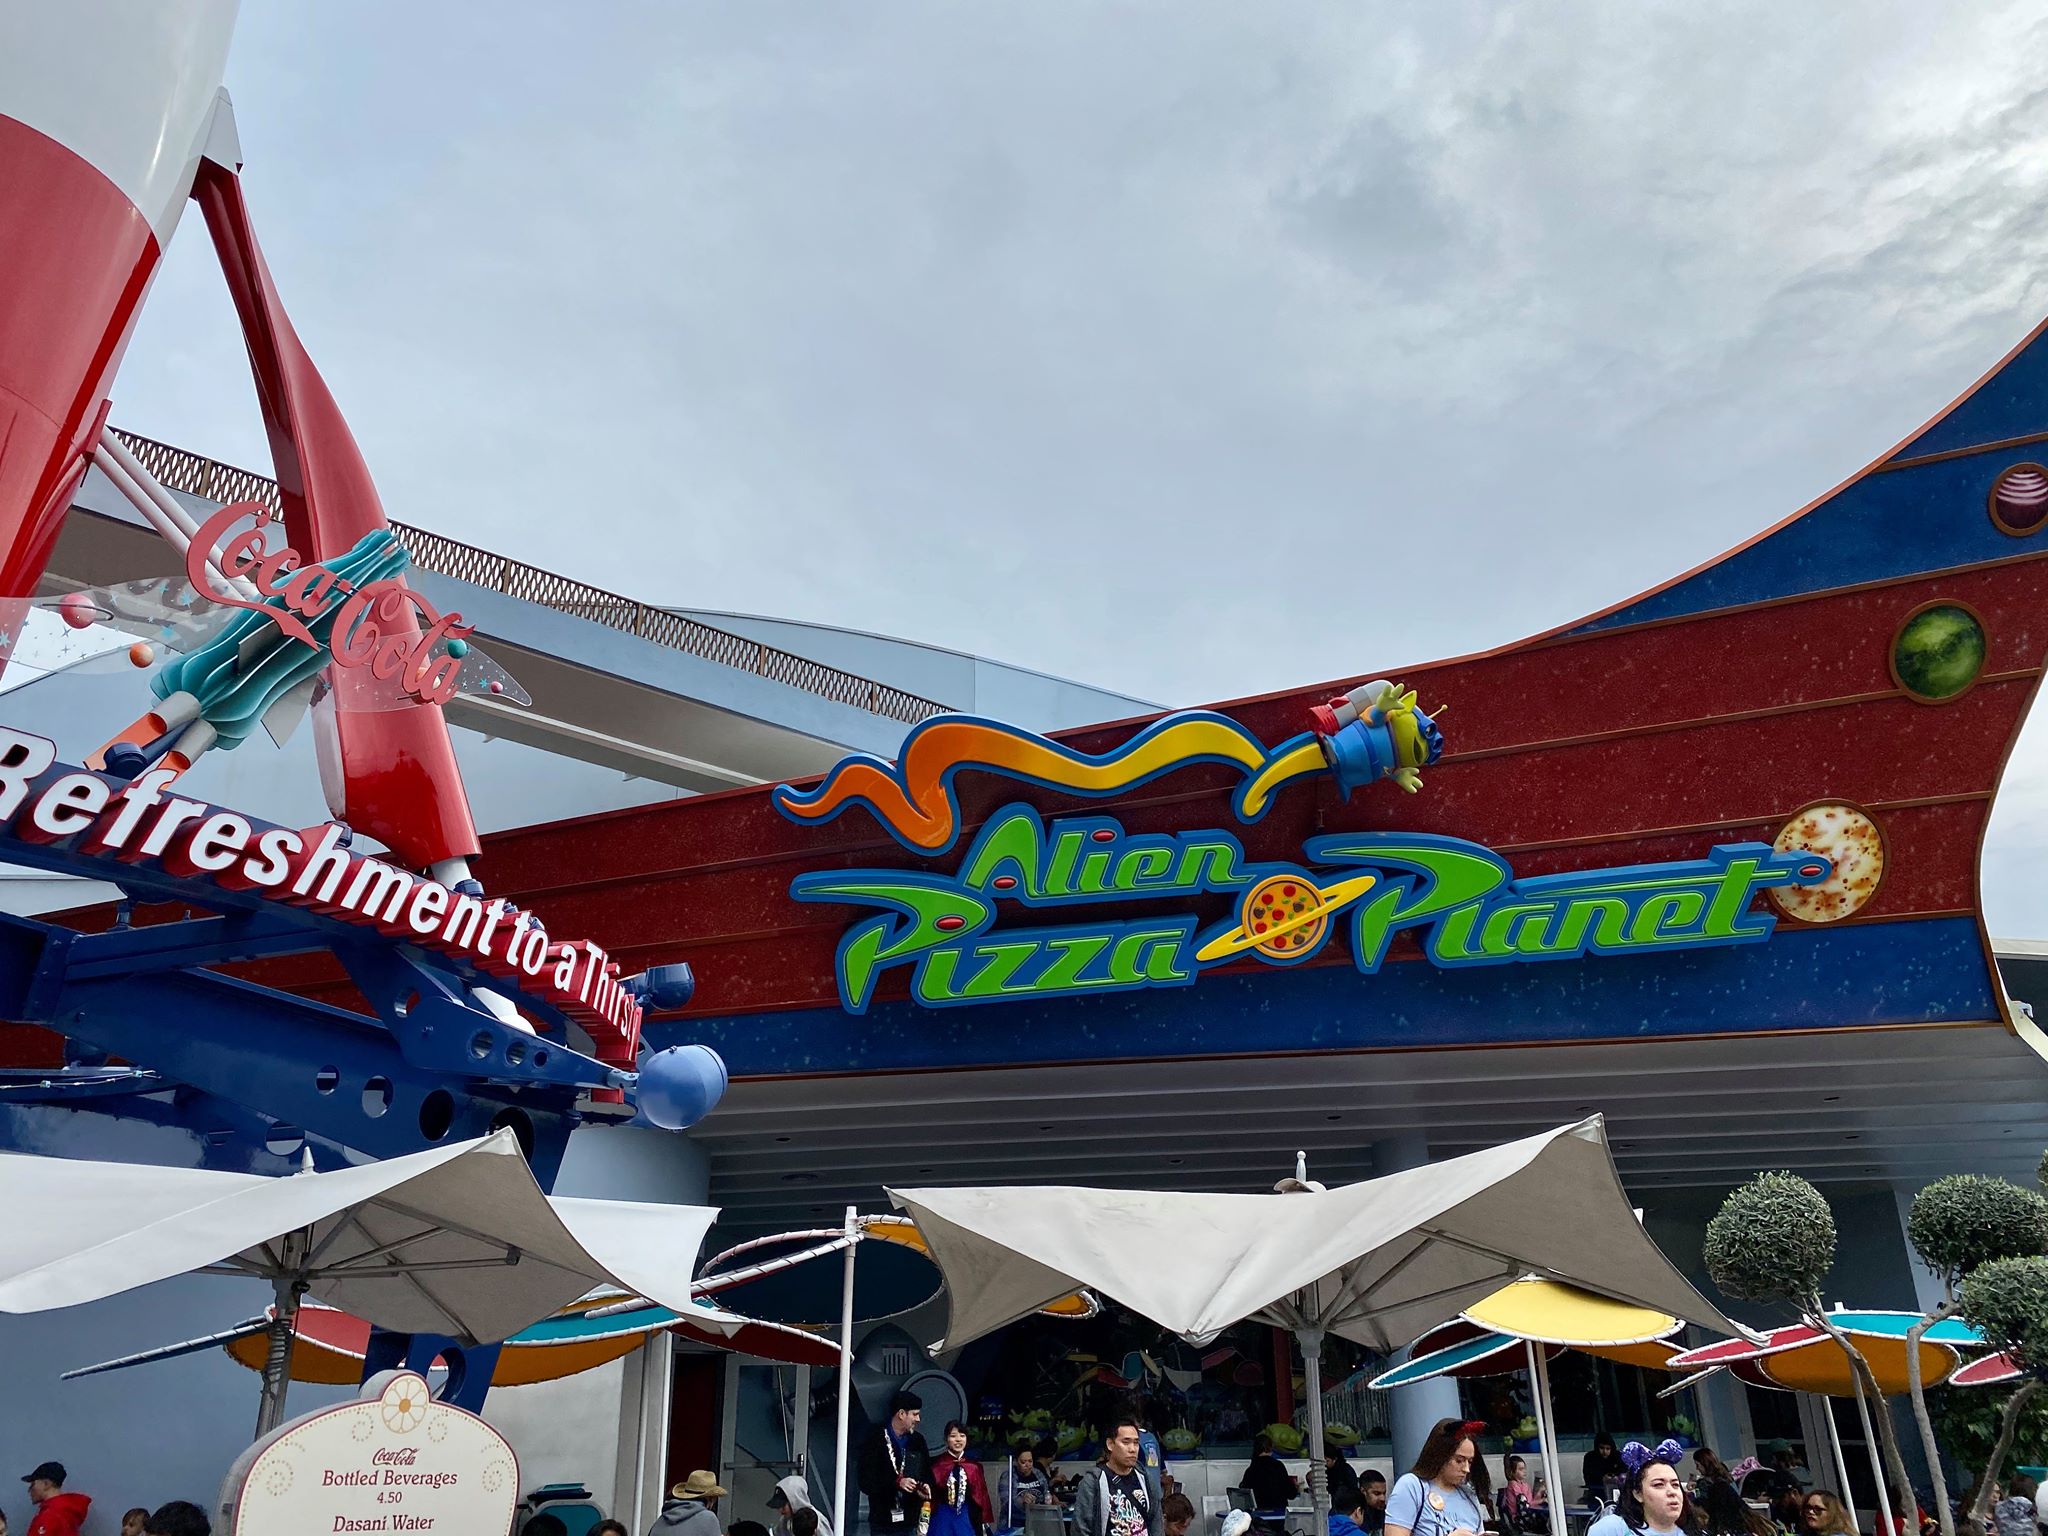 Alien Pizza Planet - Food at Disneyland